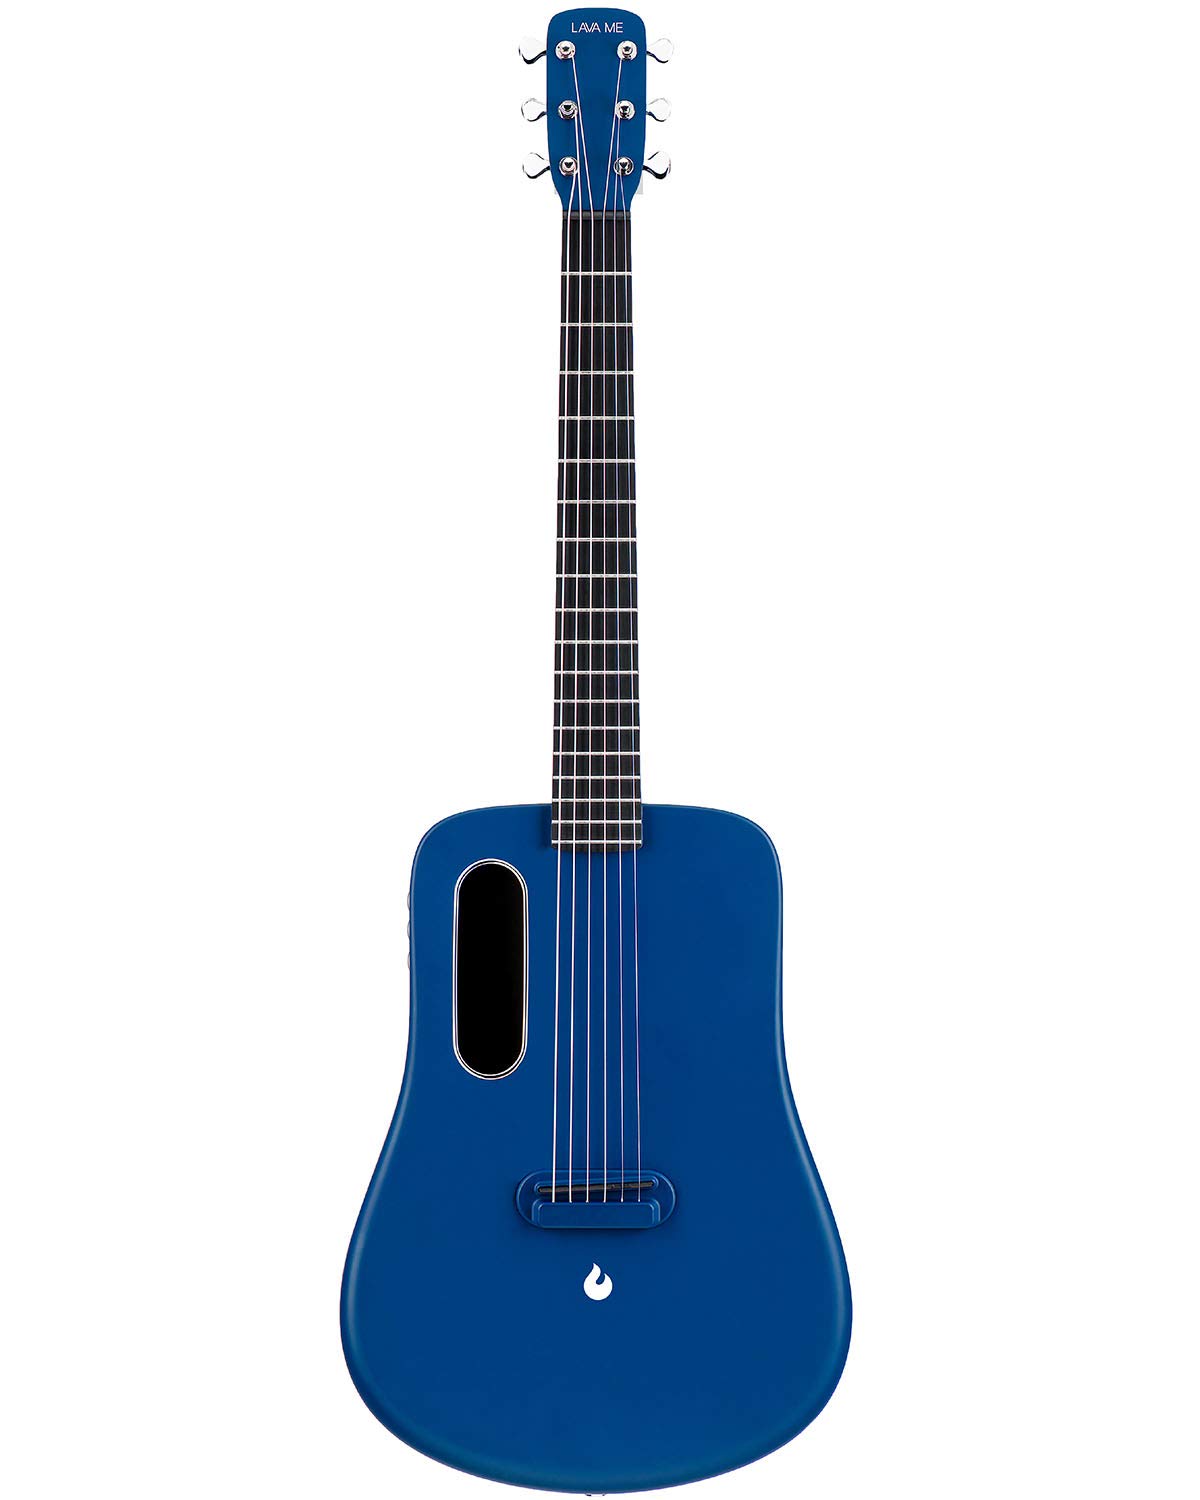 LAVA ME 2 FREEBOOST BLUE, Acoustic Guitar for sale at Richards Guitars.